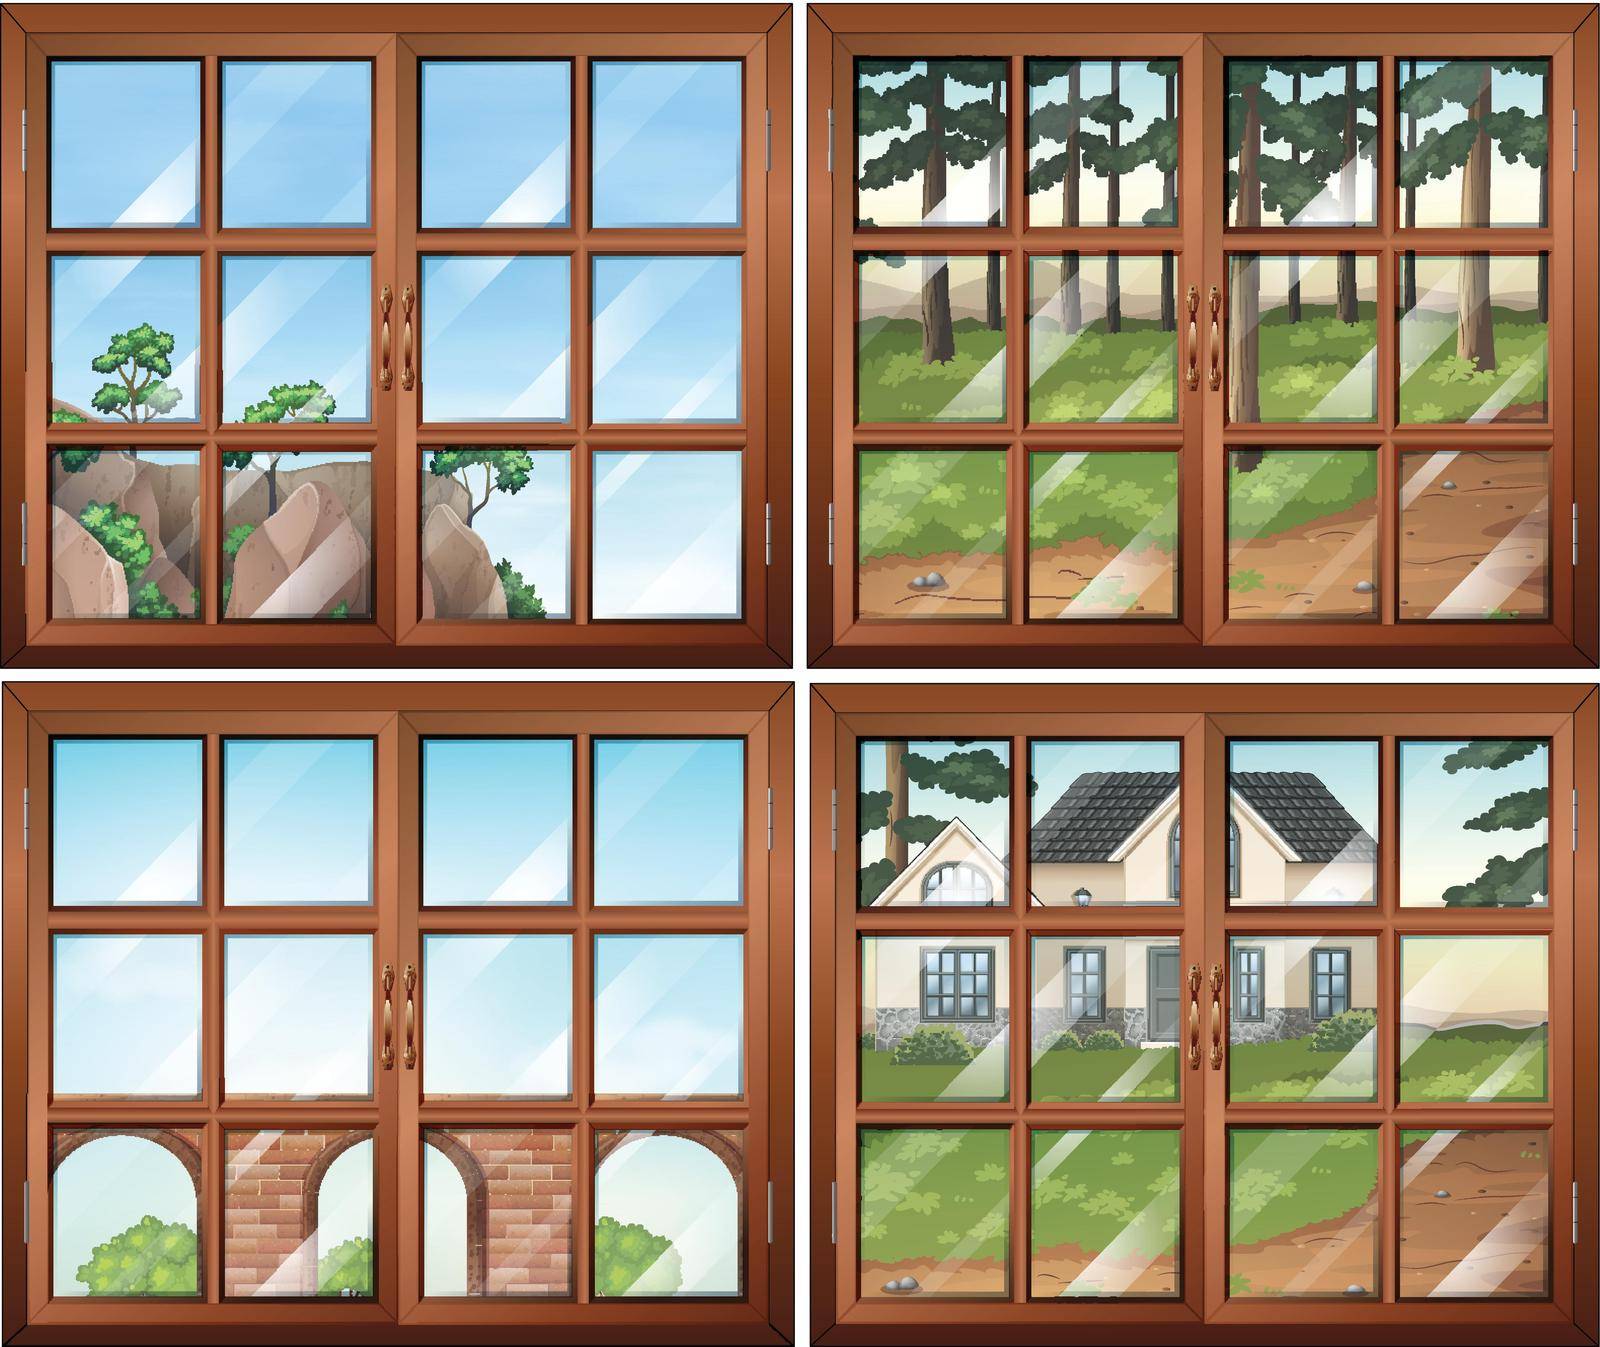 Four scene from windows illustration